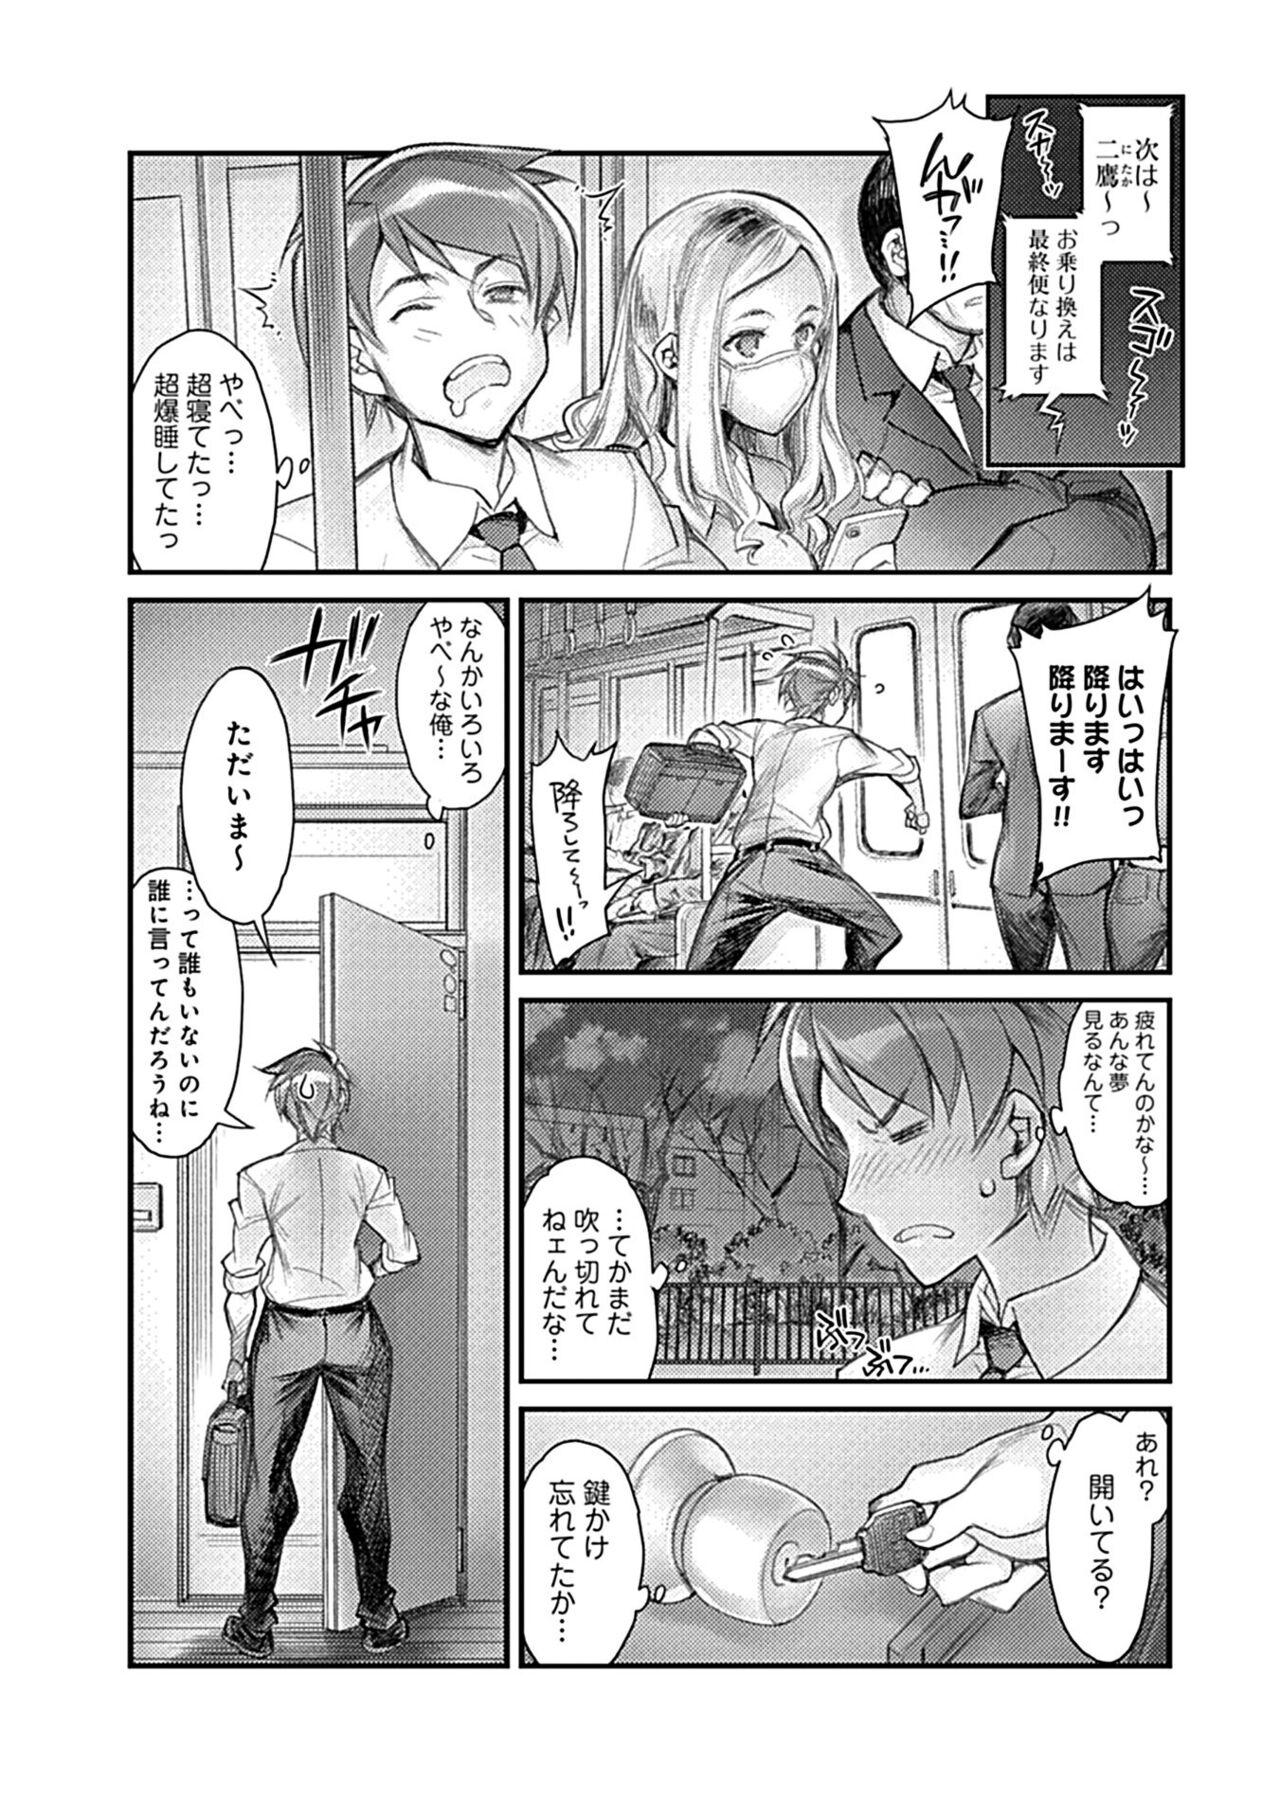 Str8 Hame Imoto 〜 Harem meito shisutazu 〜 Blowing - Page 7